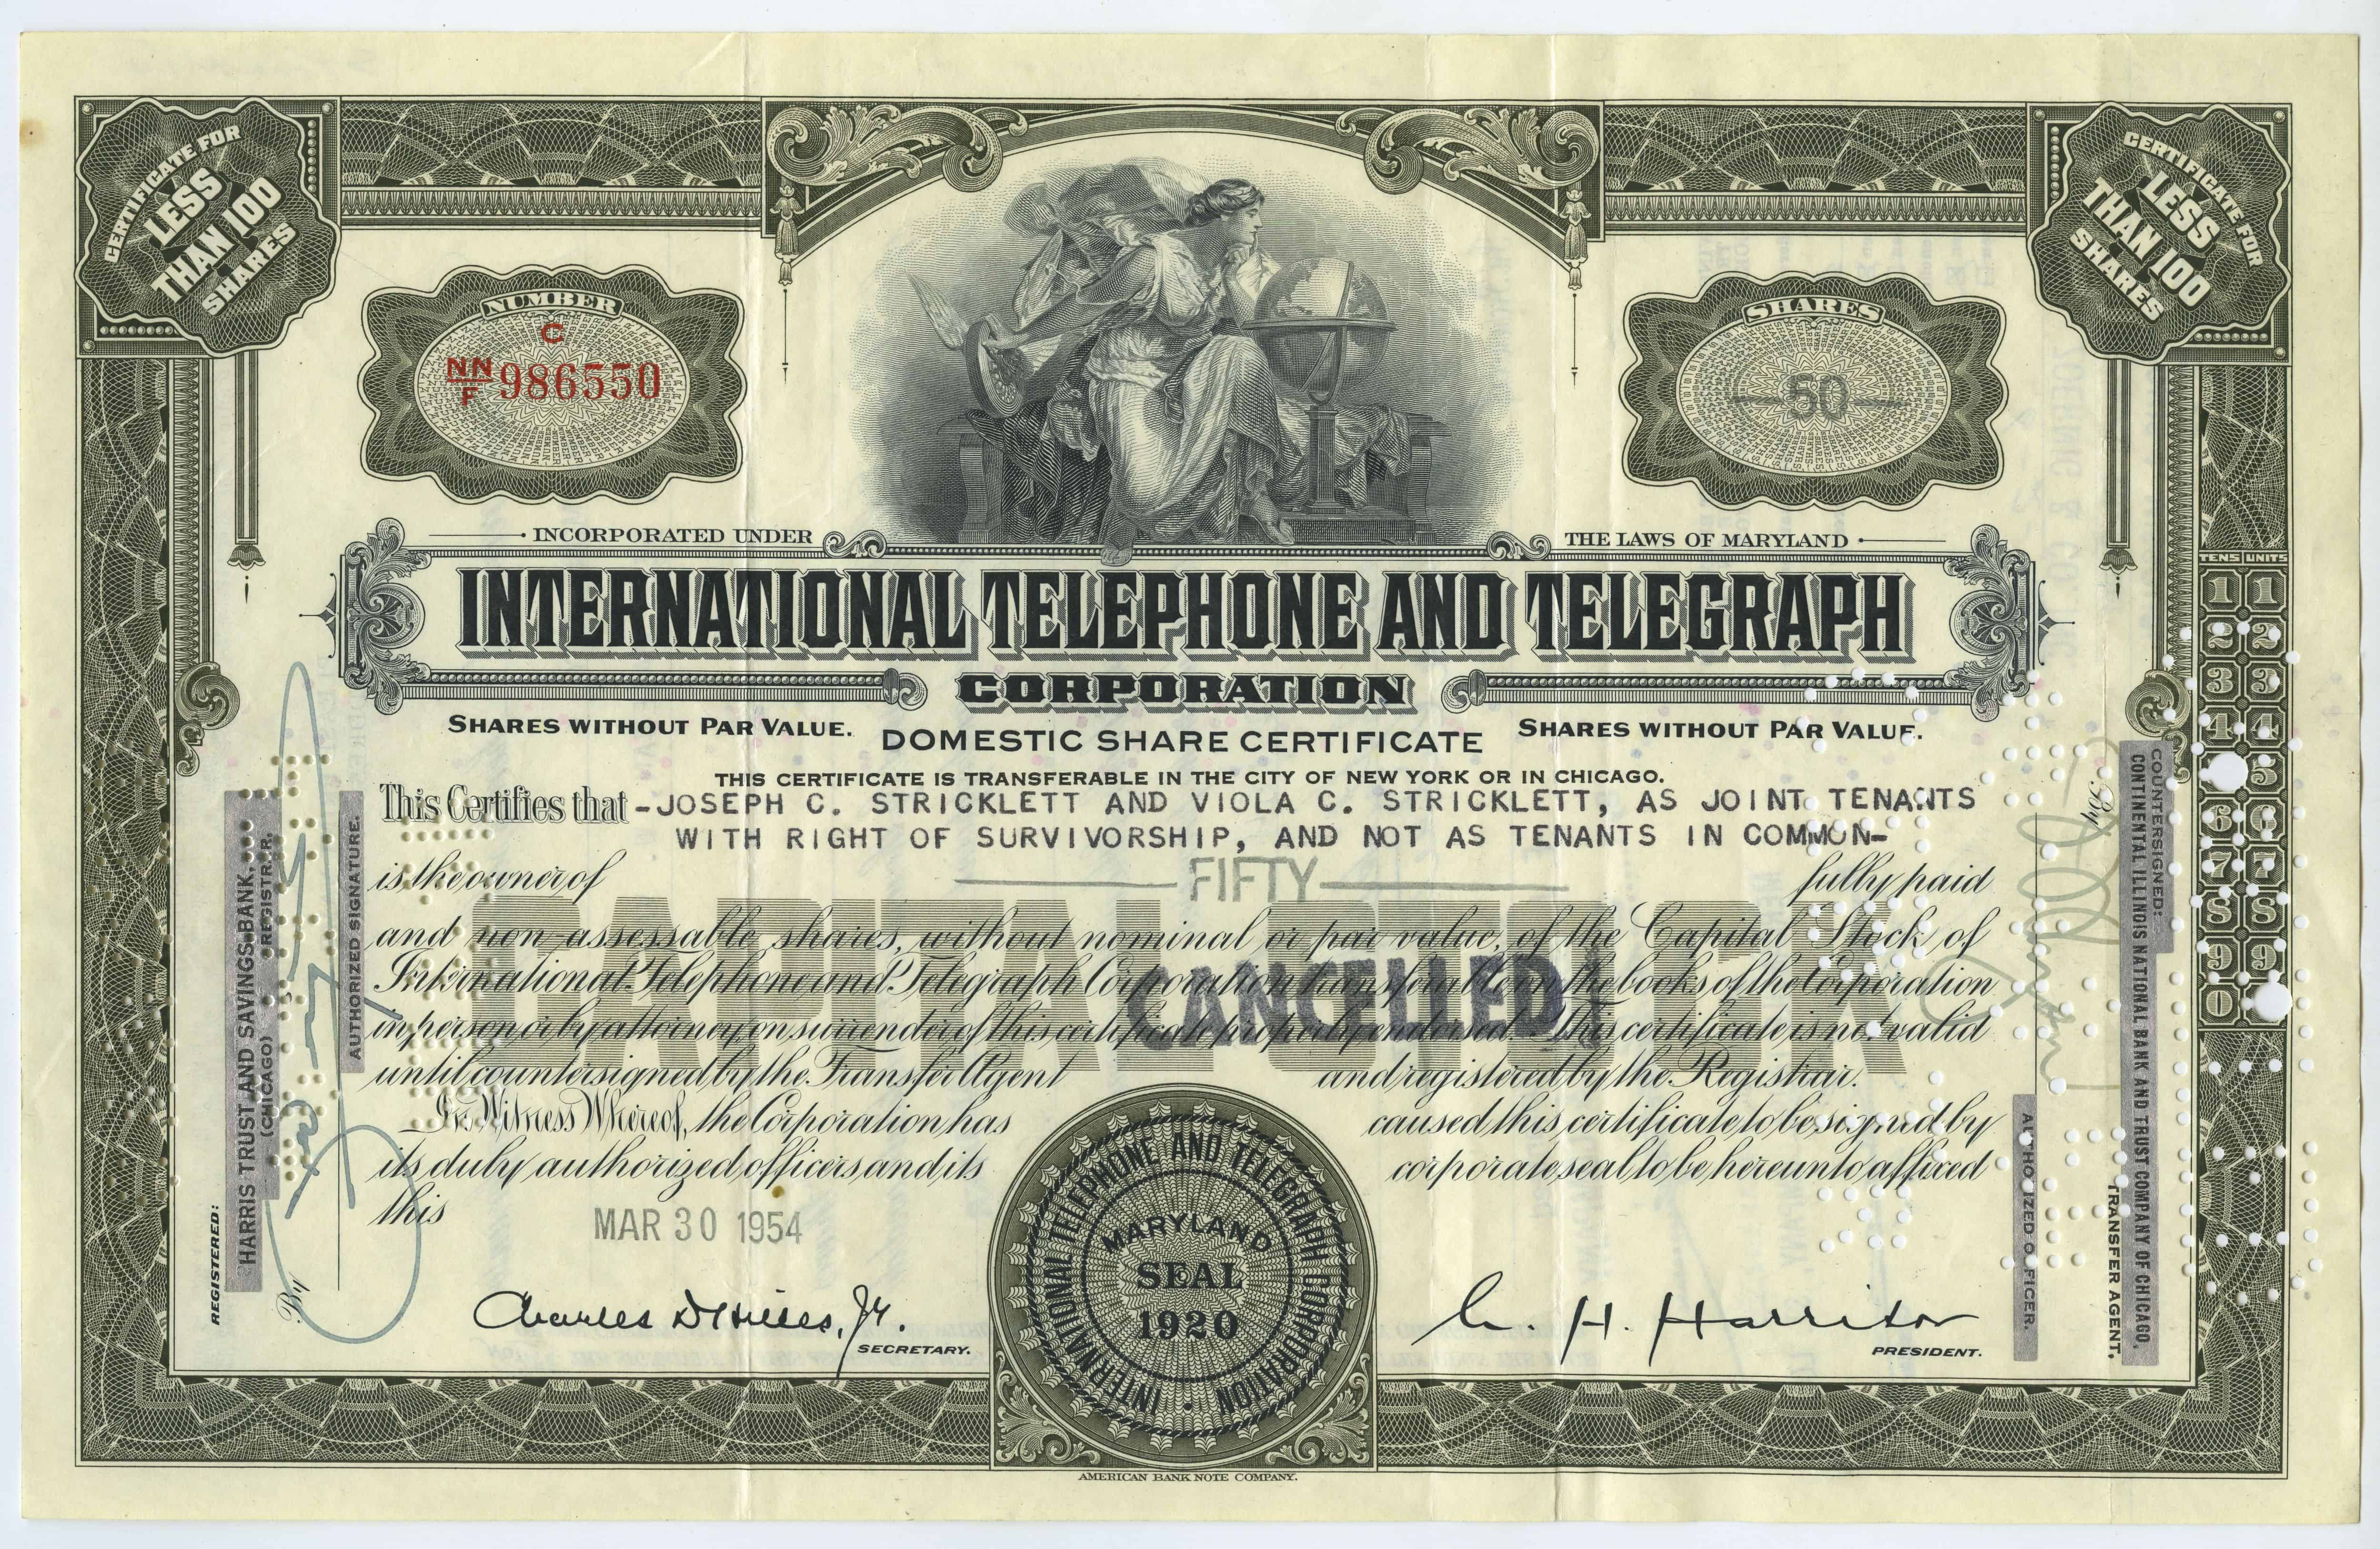 50 akcji spółki International Telephone and Telegraph Corporation z 30 marca 1954 roku